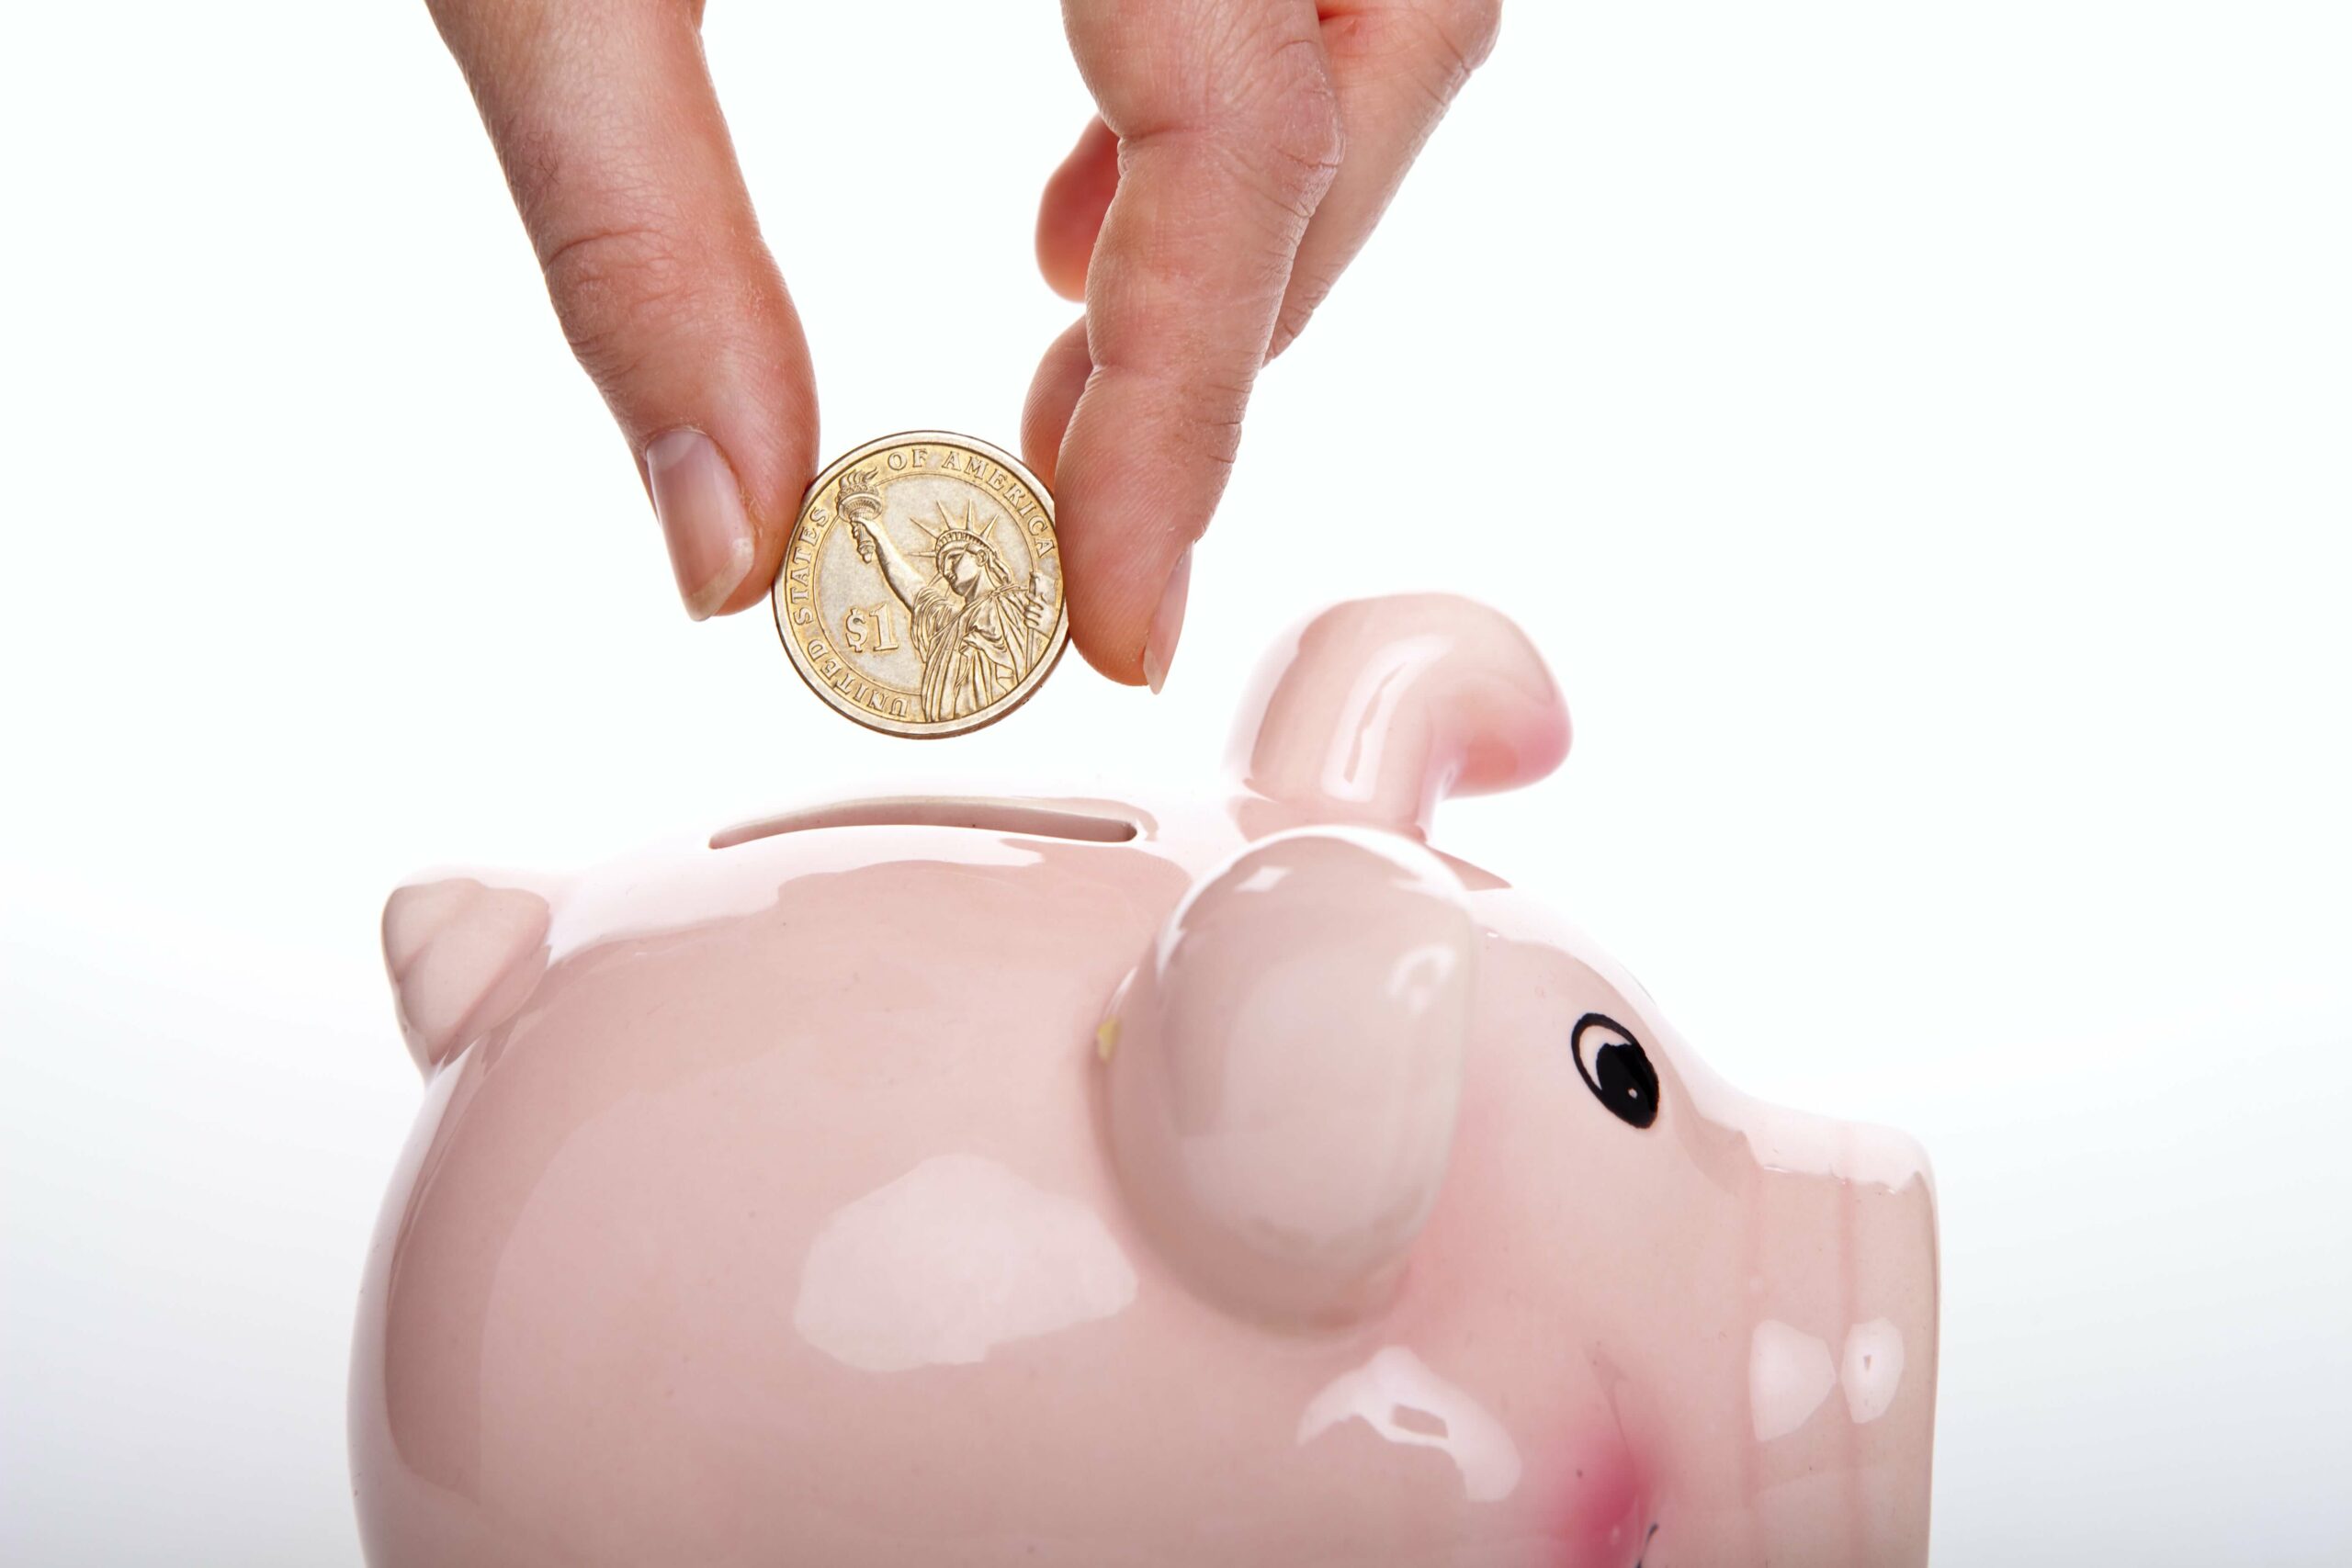 hand dropping a coin into a piggy bank